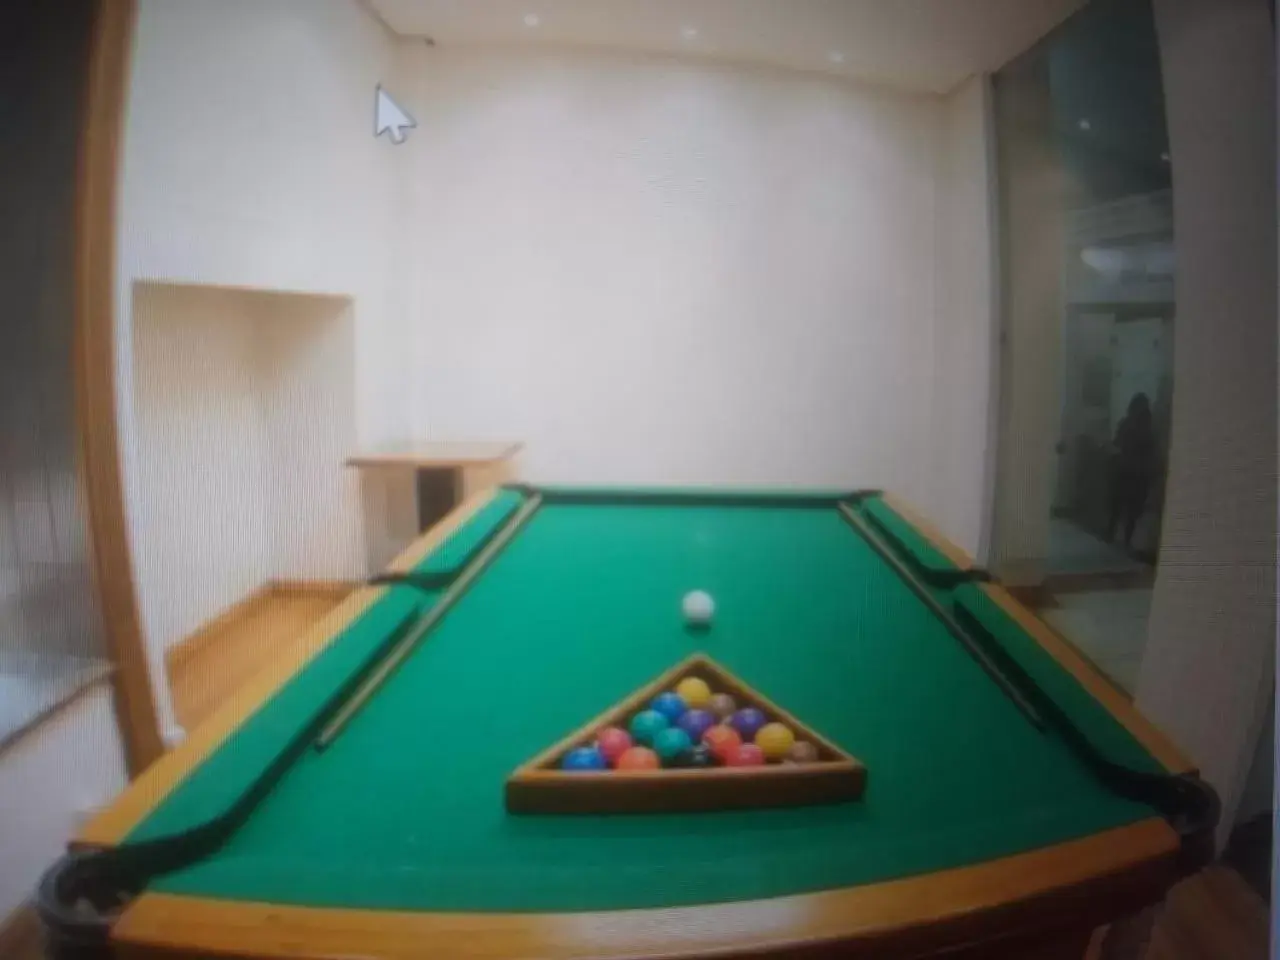 Game Room, Billiards in Embaixador Hotel e Centro de Eventos